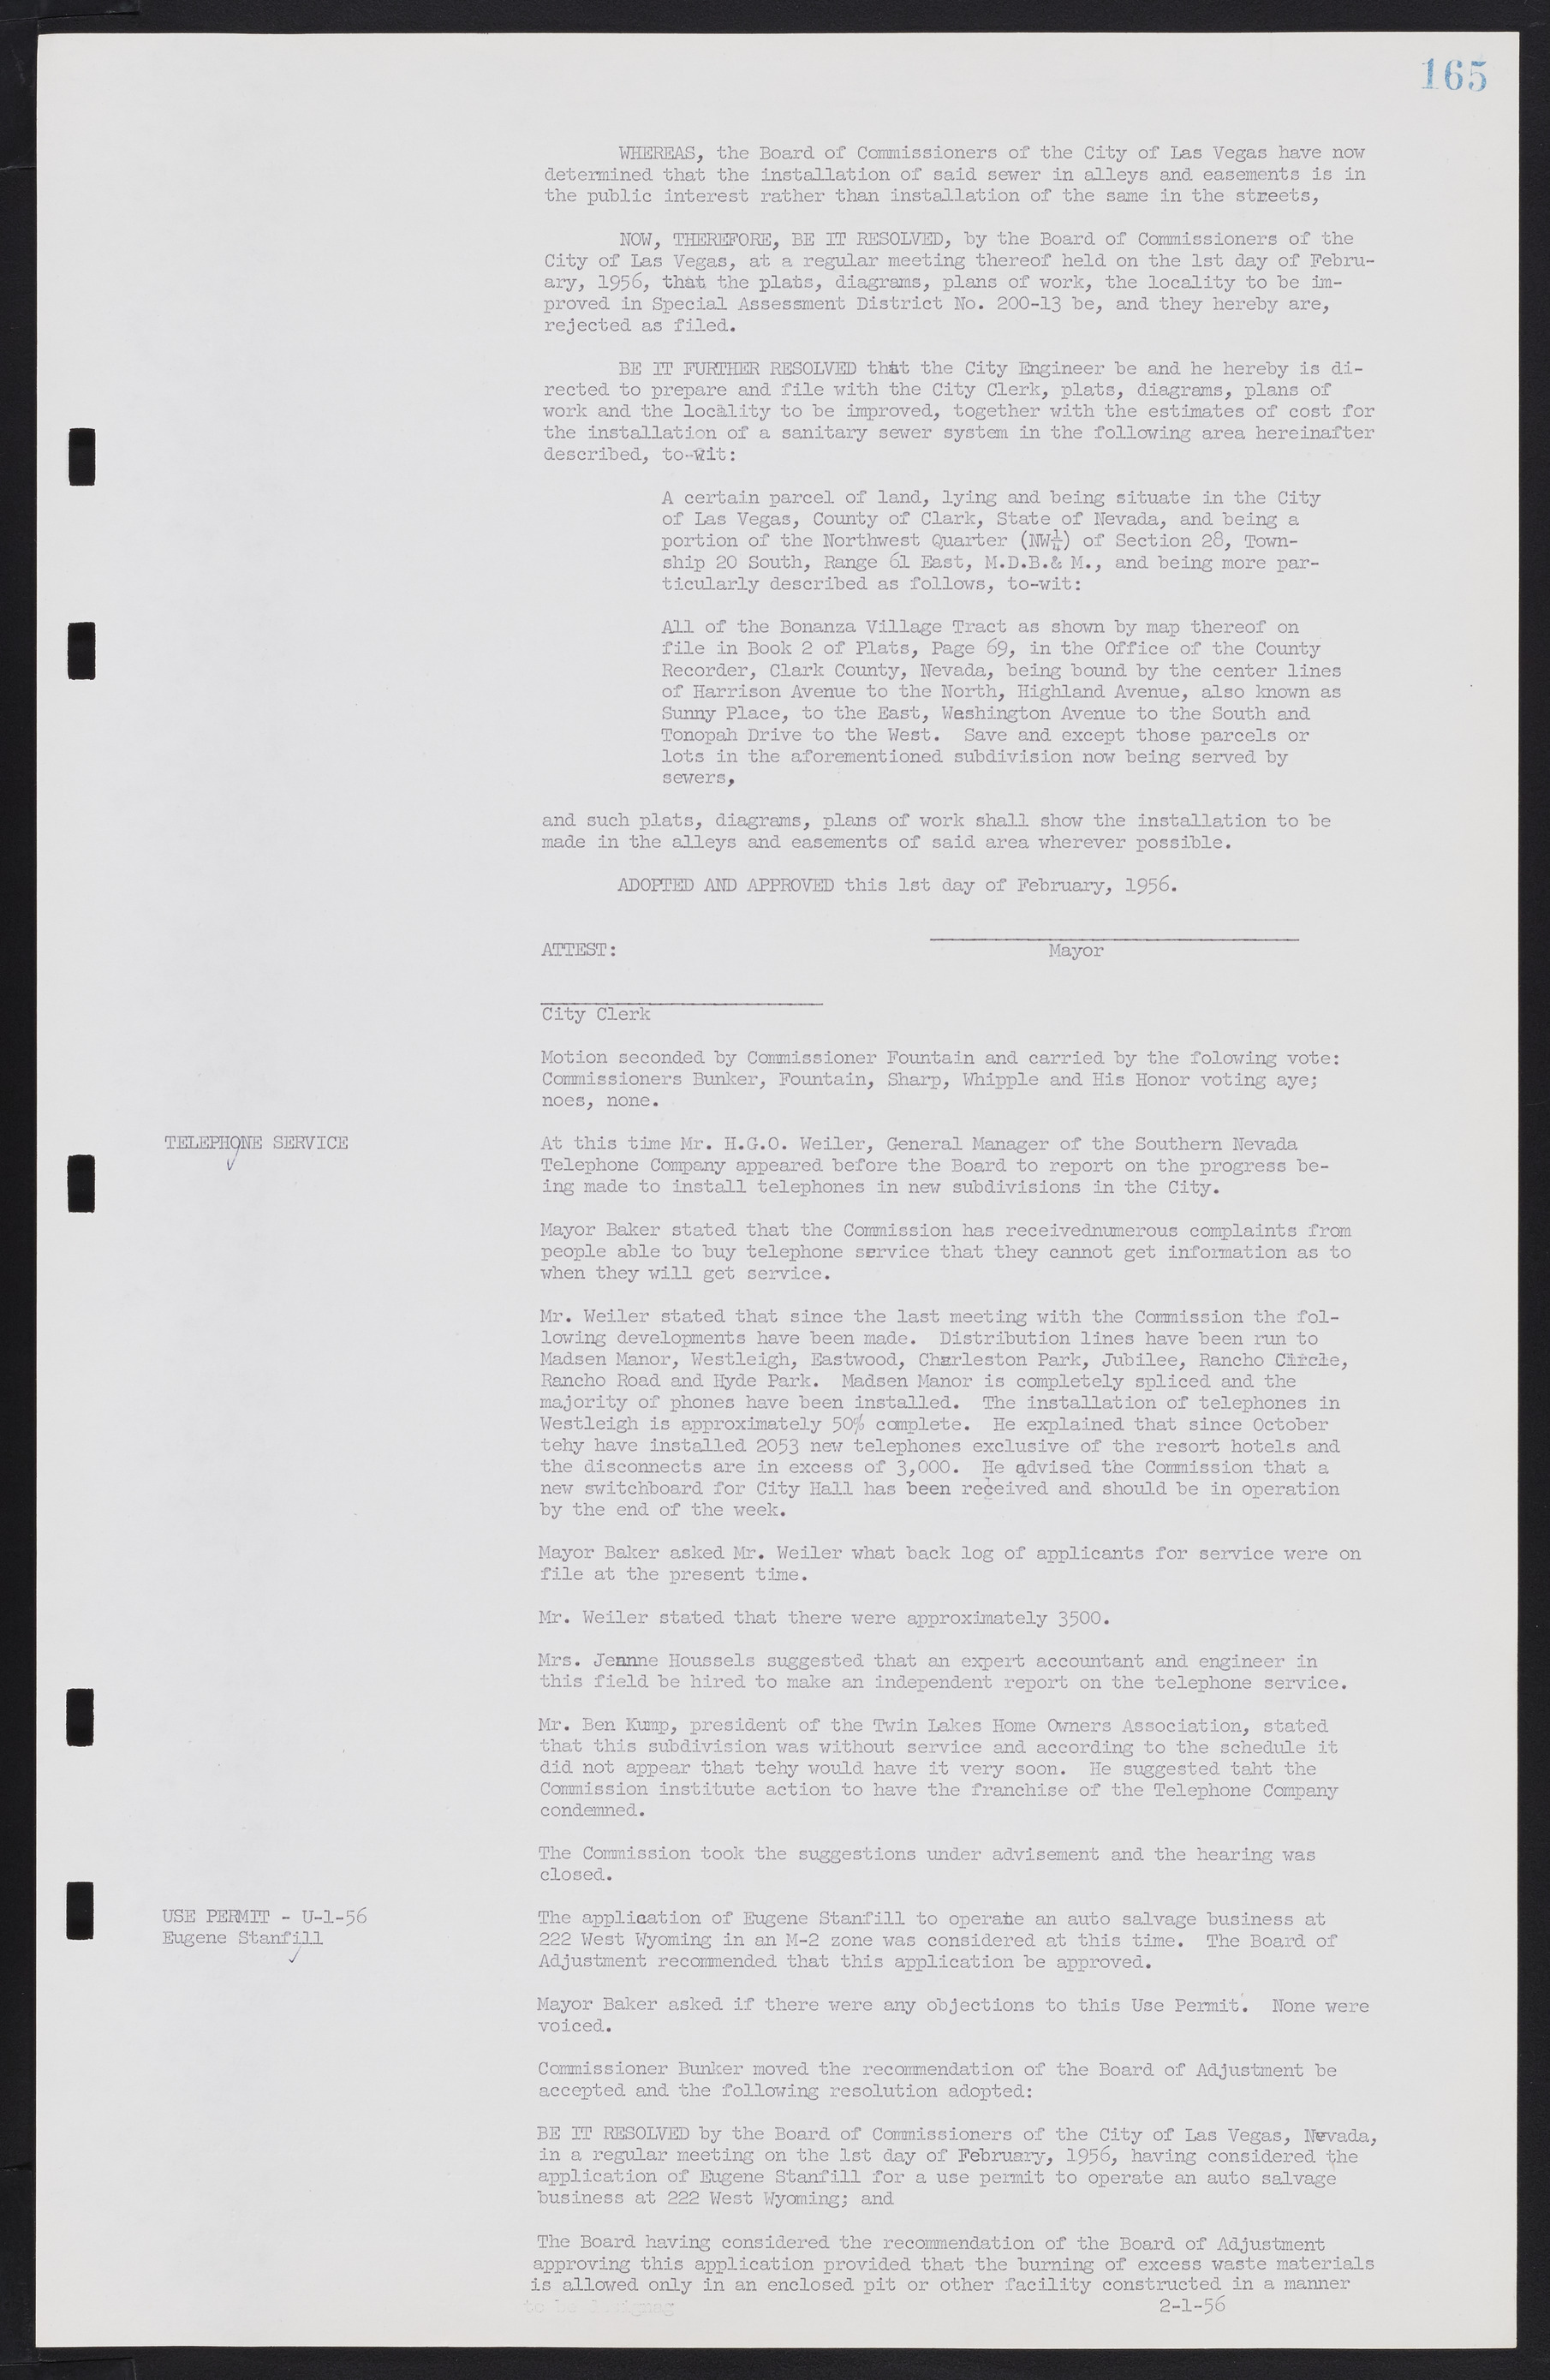 Las Vegas City Commission Minutes, September 21, 1955 to November 20, 1957, lvc000010-181